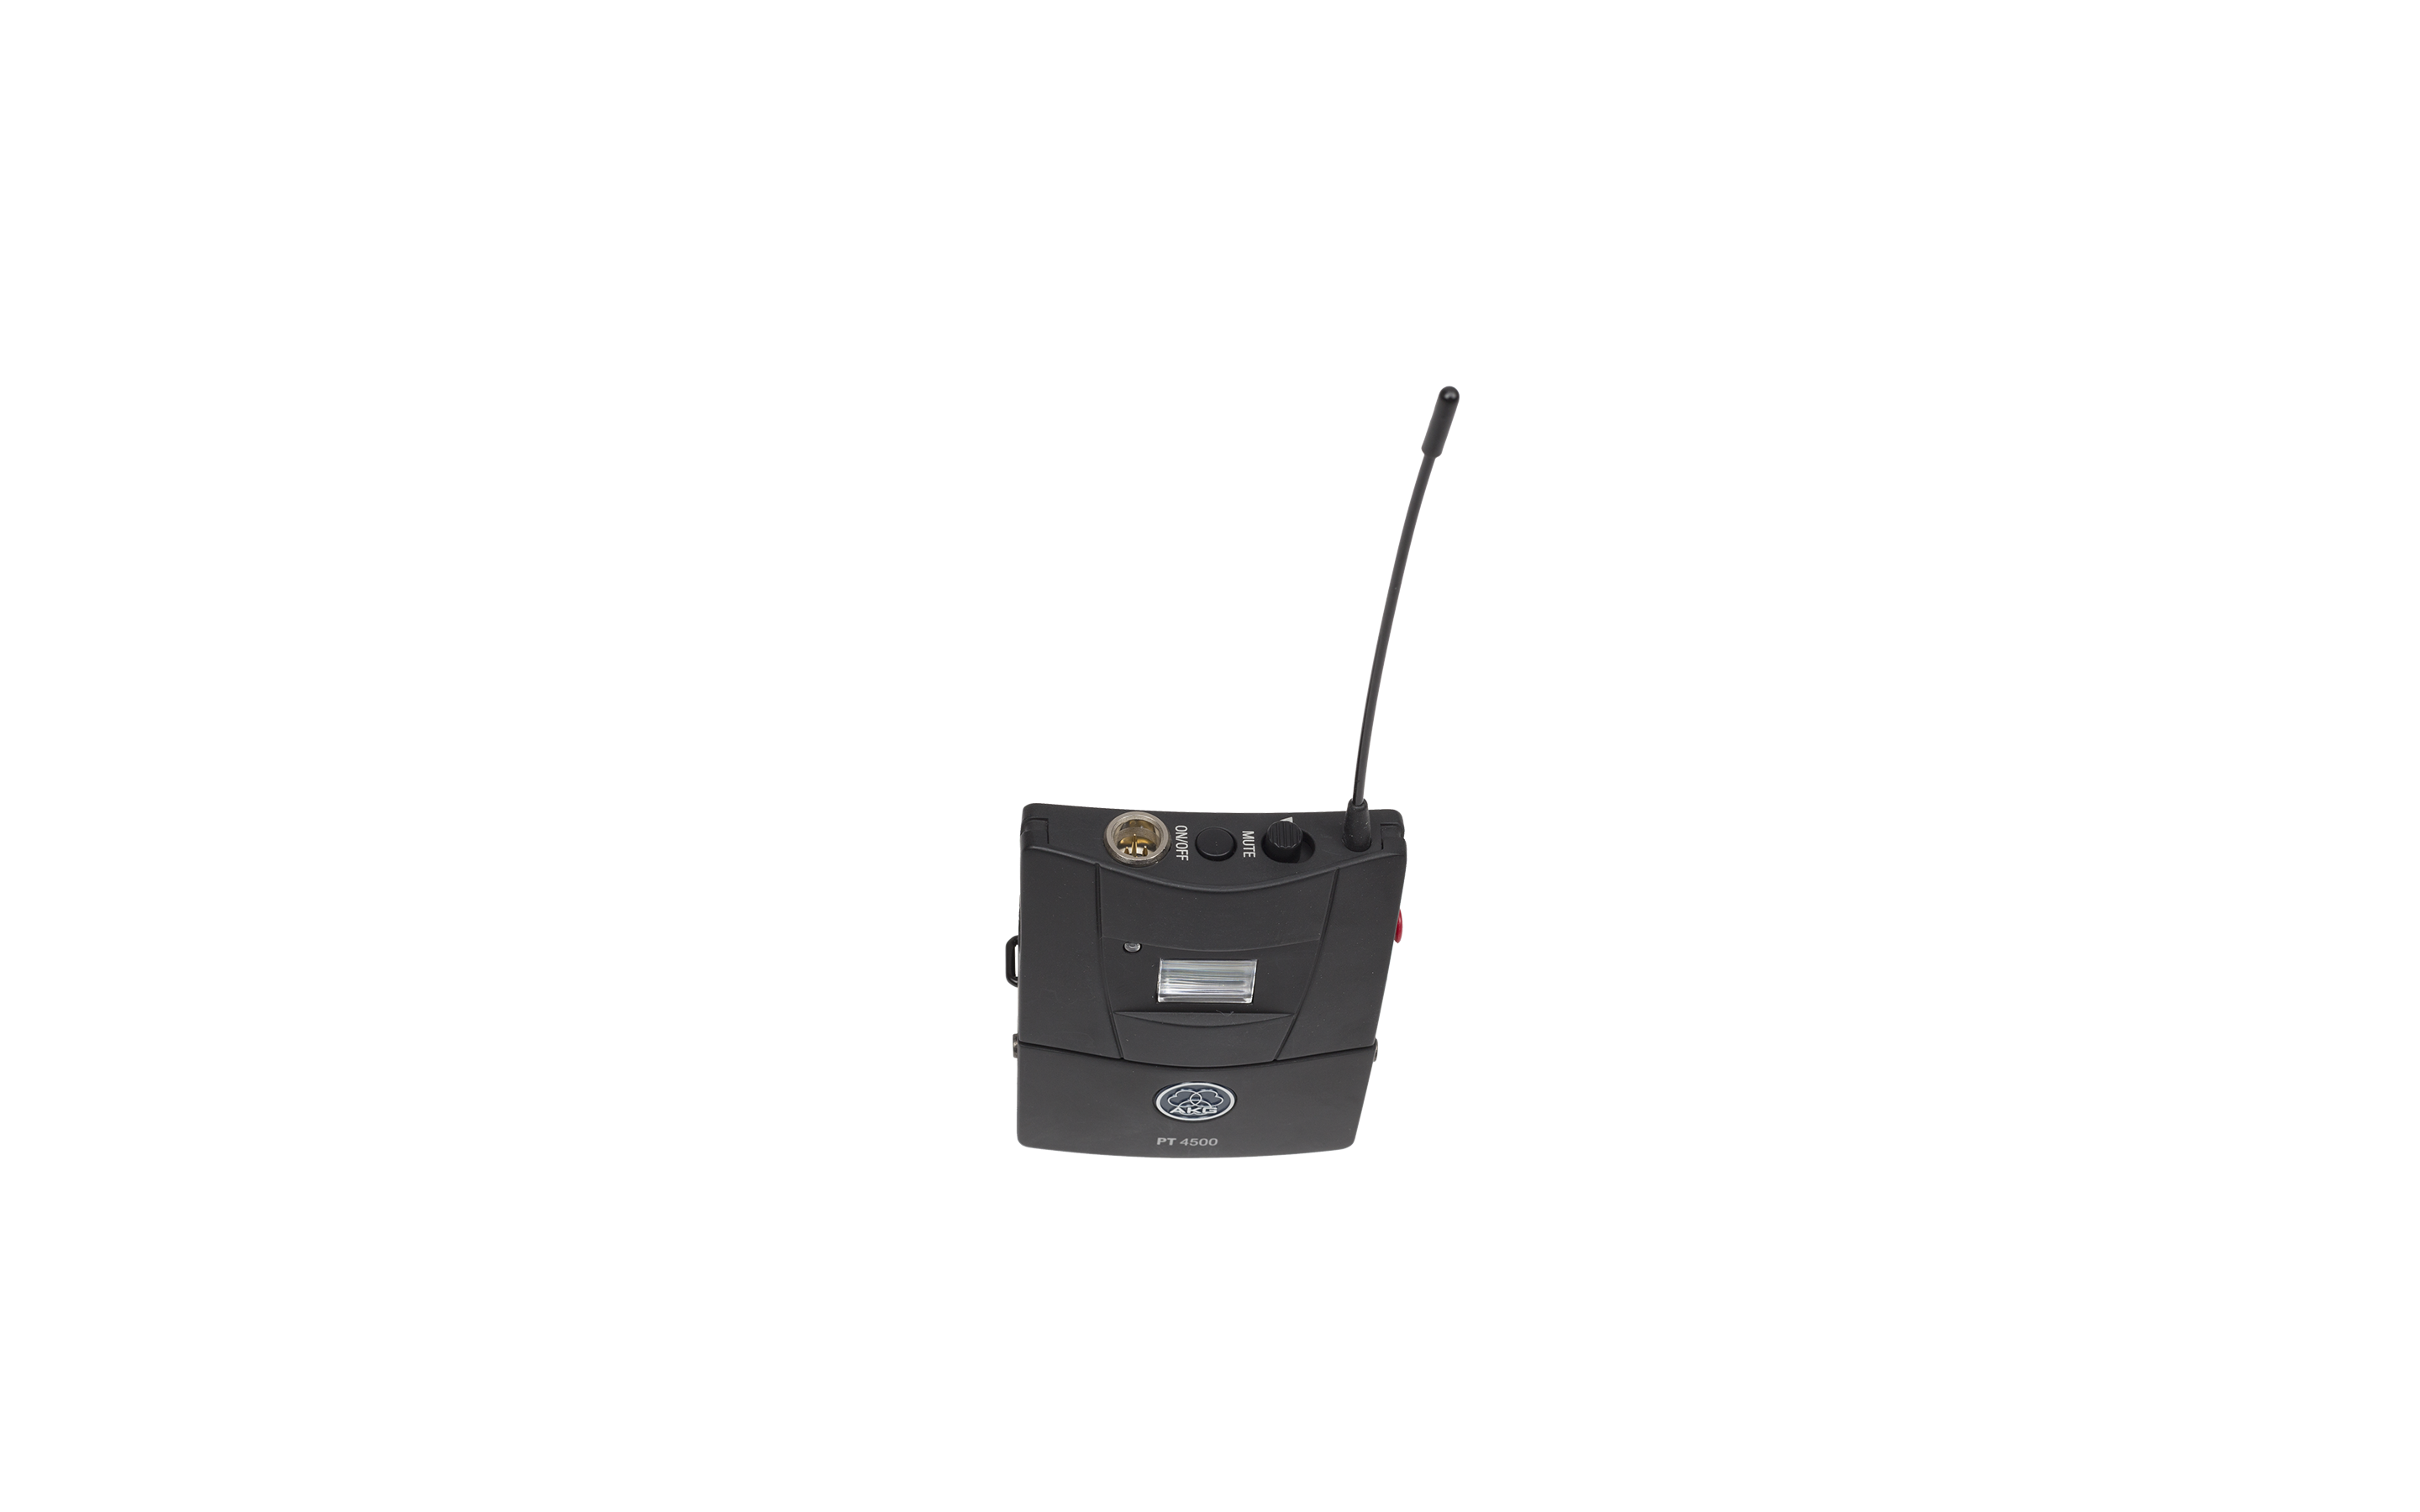 Taschensender, Pocket Transmitter